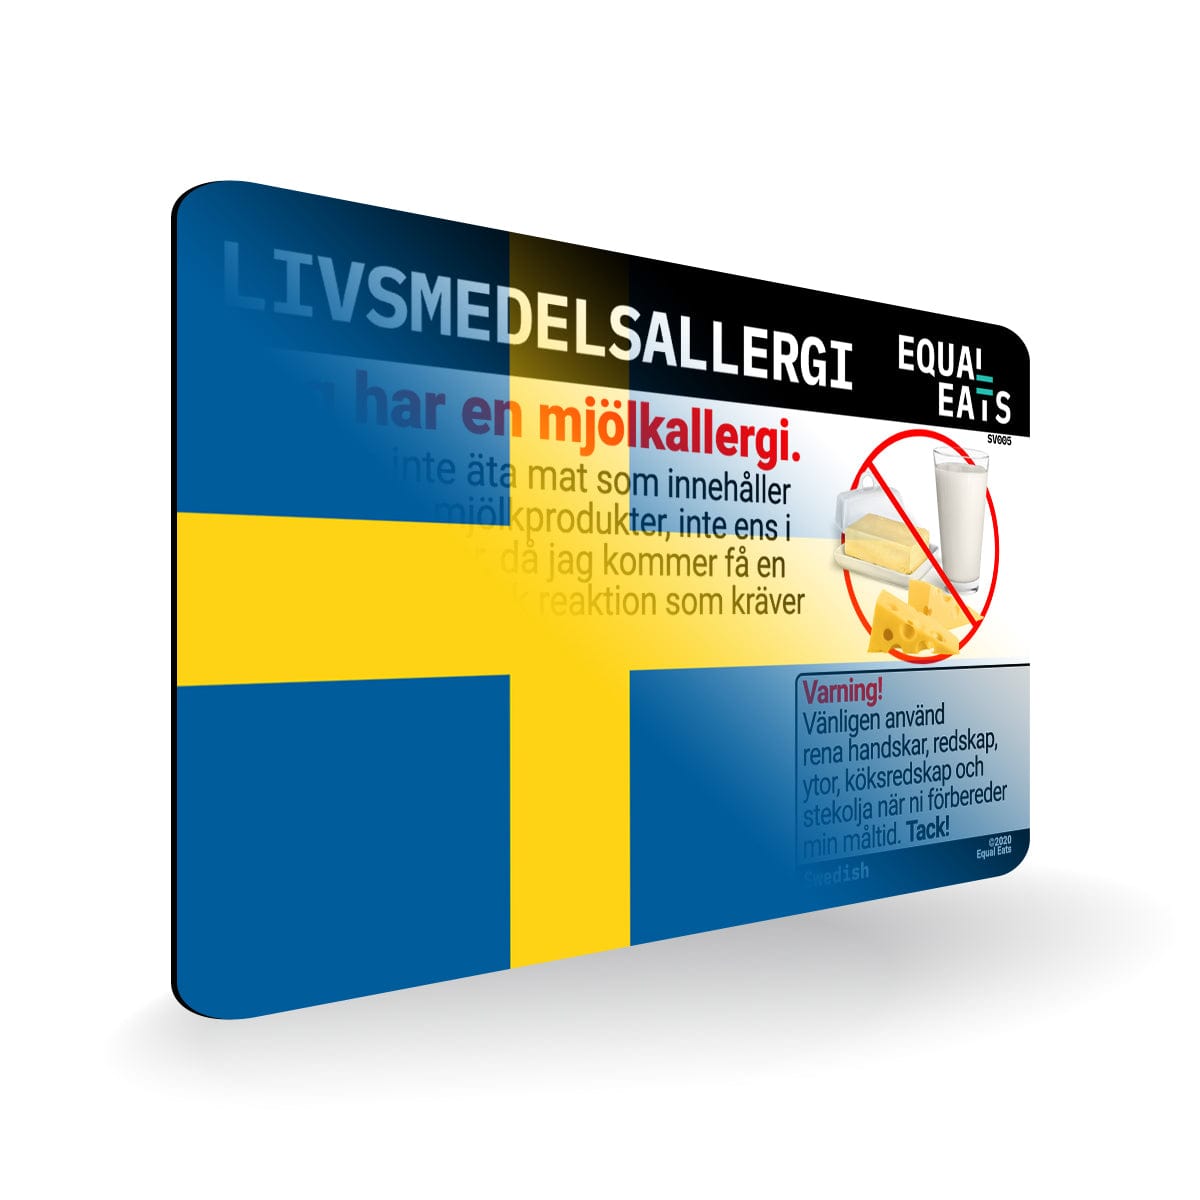 Milk Allergy in Swedish. Milk Allergy Card for Sweden